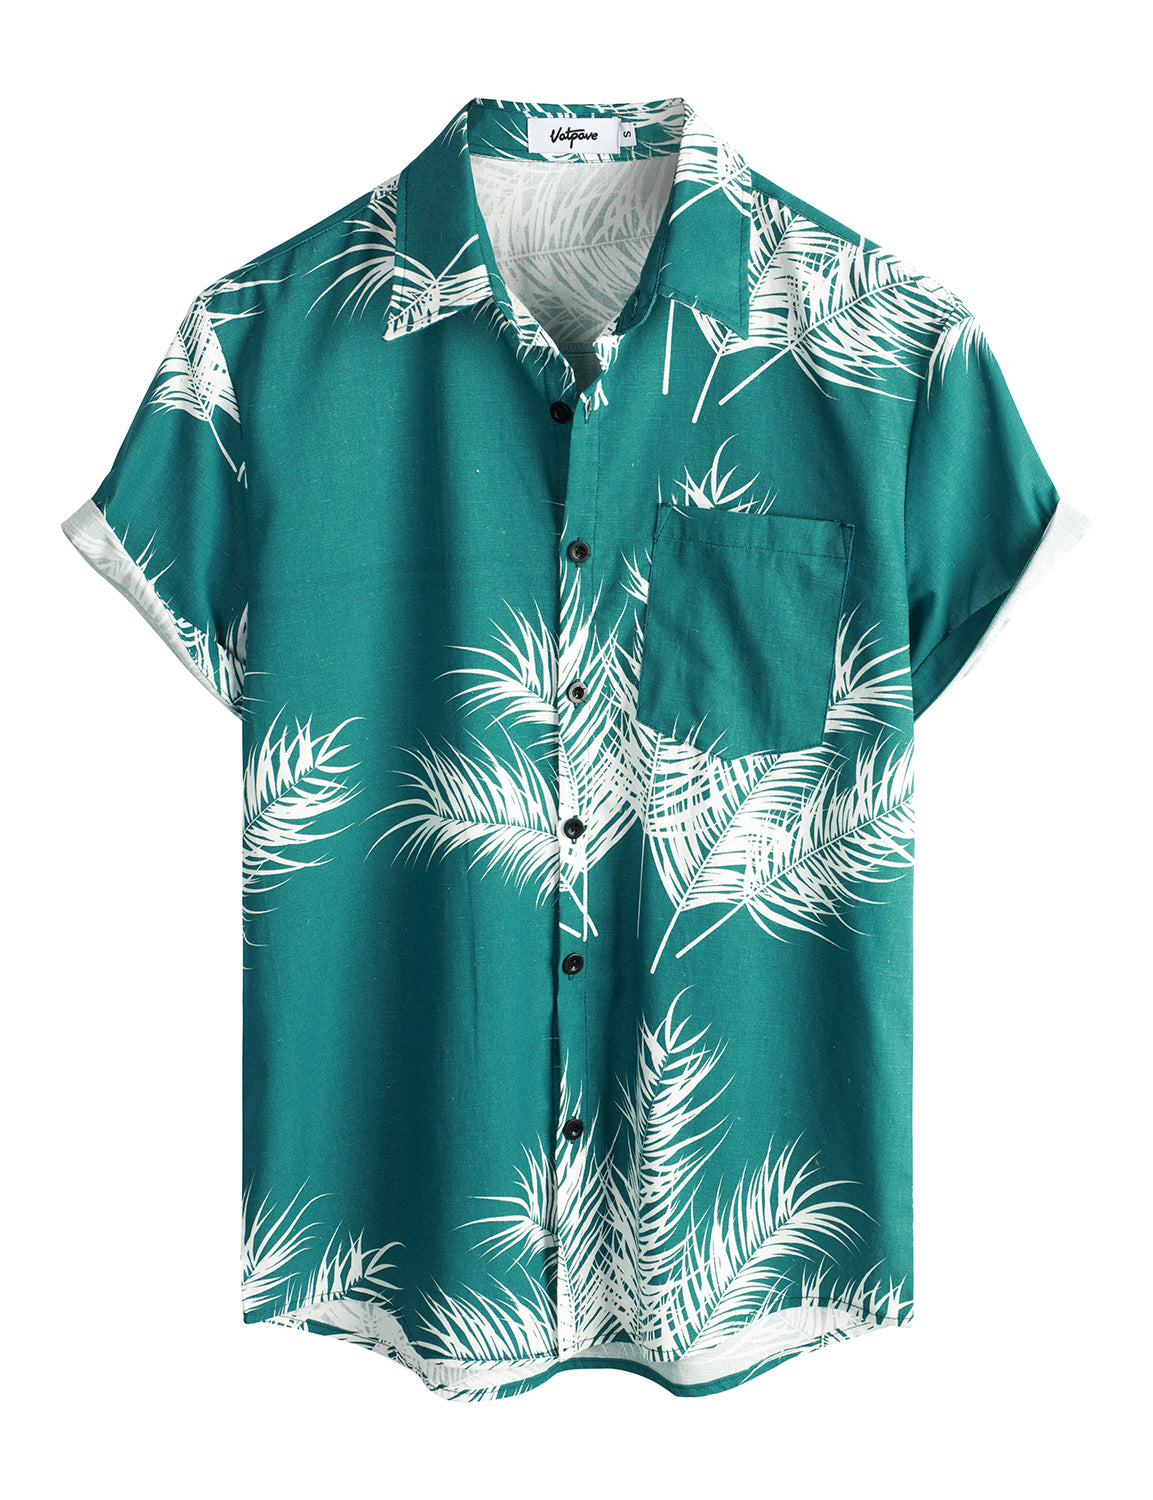 VATPAVE Mens Hawaiian Floral Shirts Cotton Linen Casual Button Down Sh